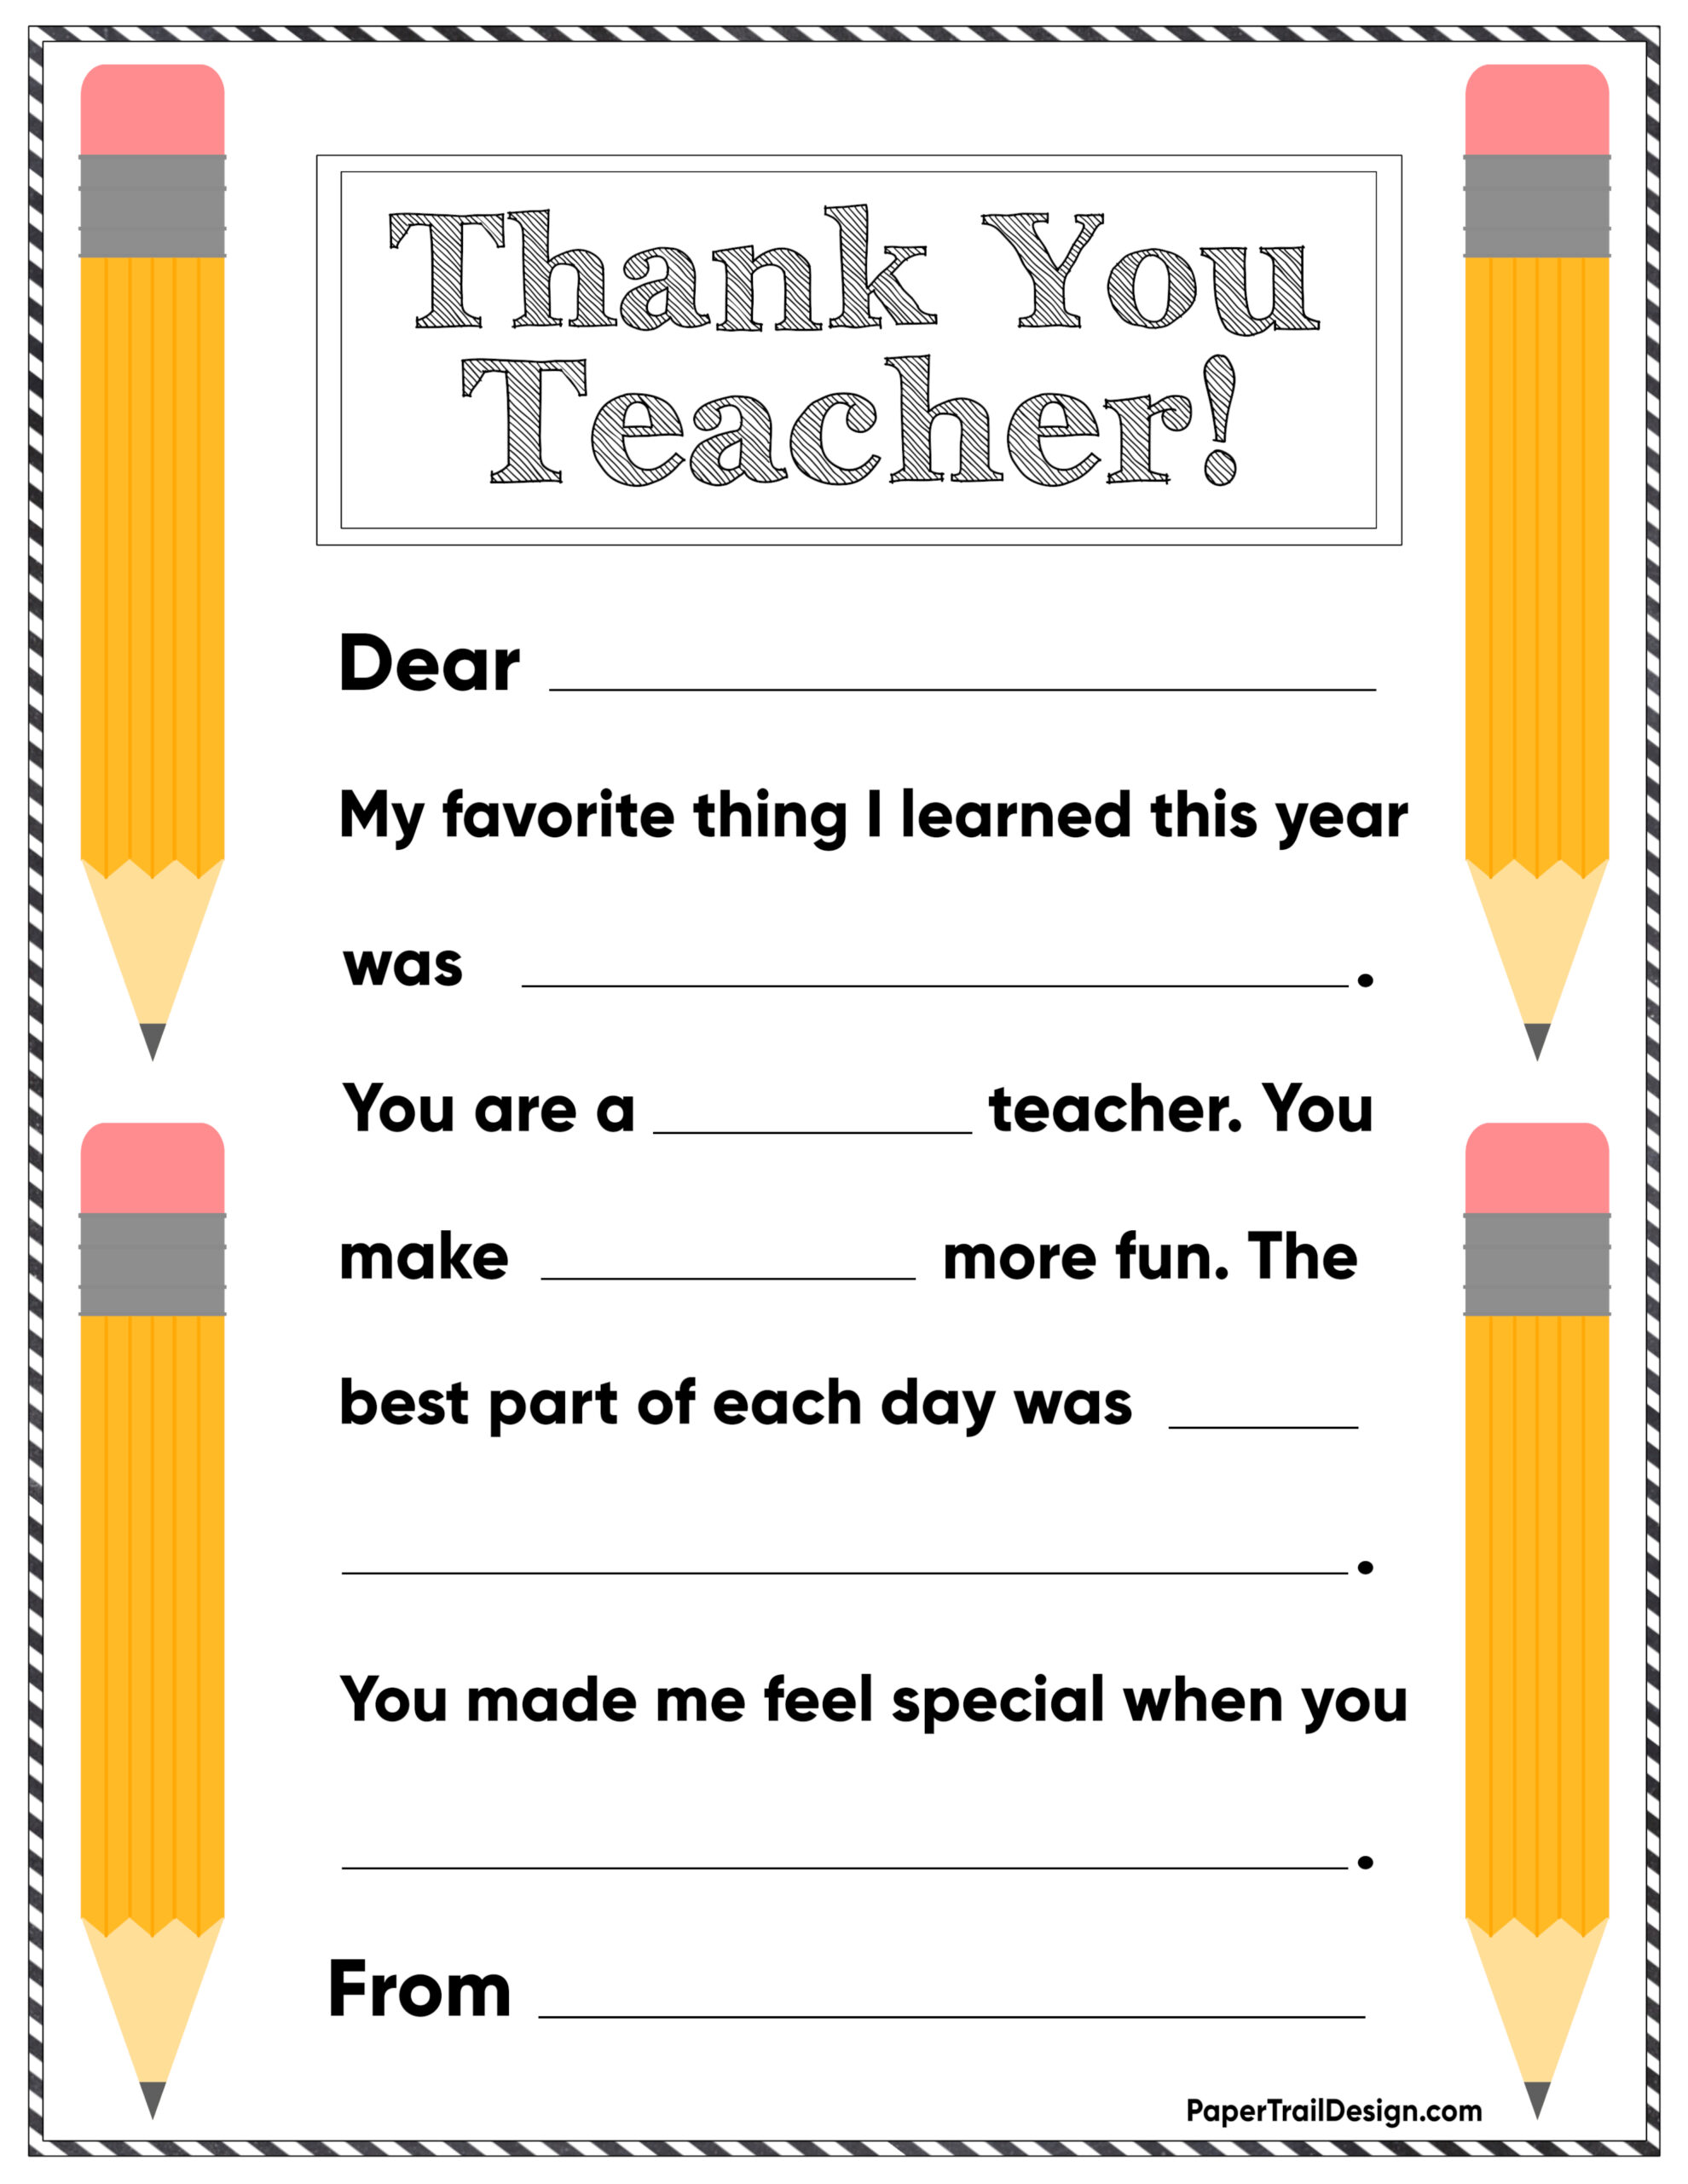 printable-thank-you-teacher